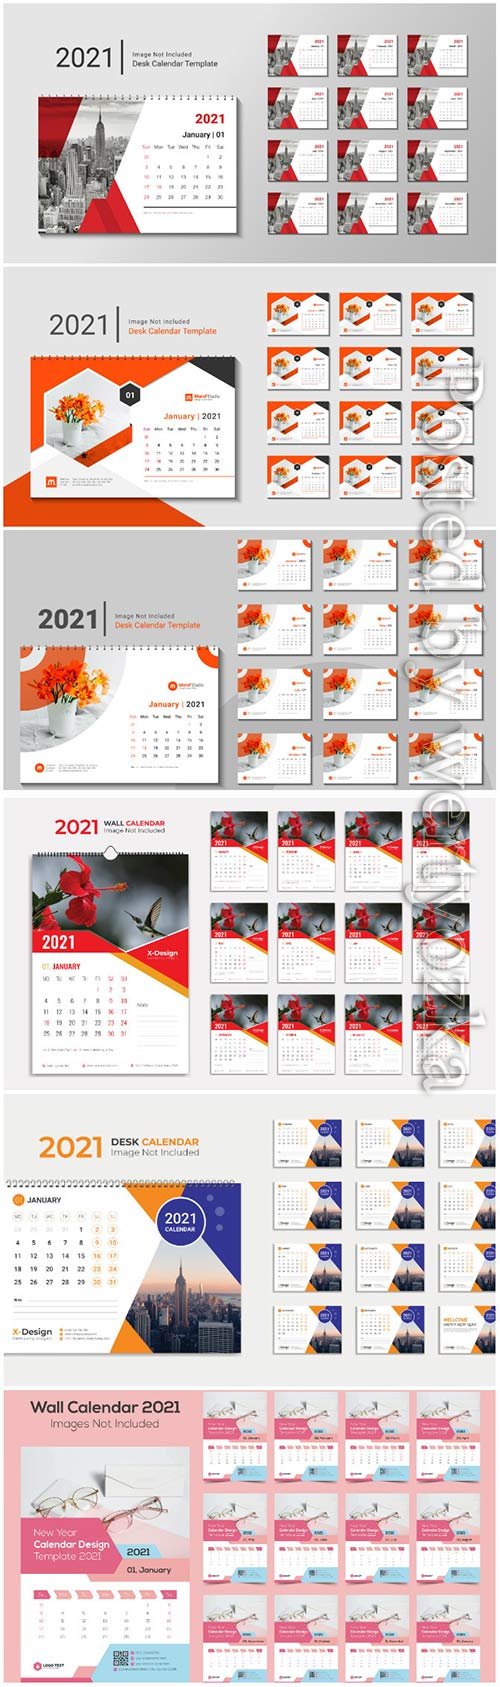 Desk calendar 2021 template design for new year vol 2